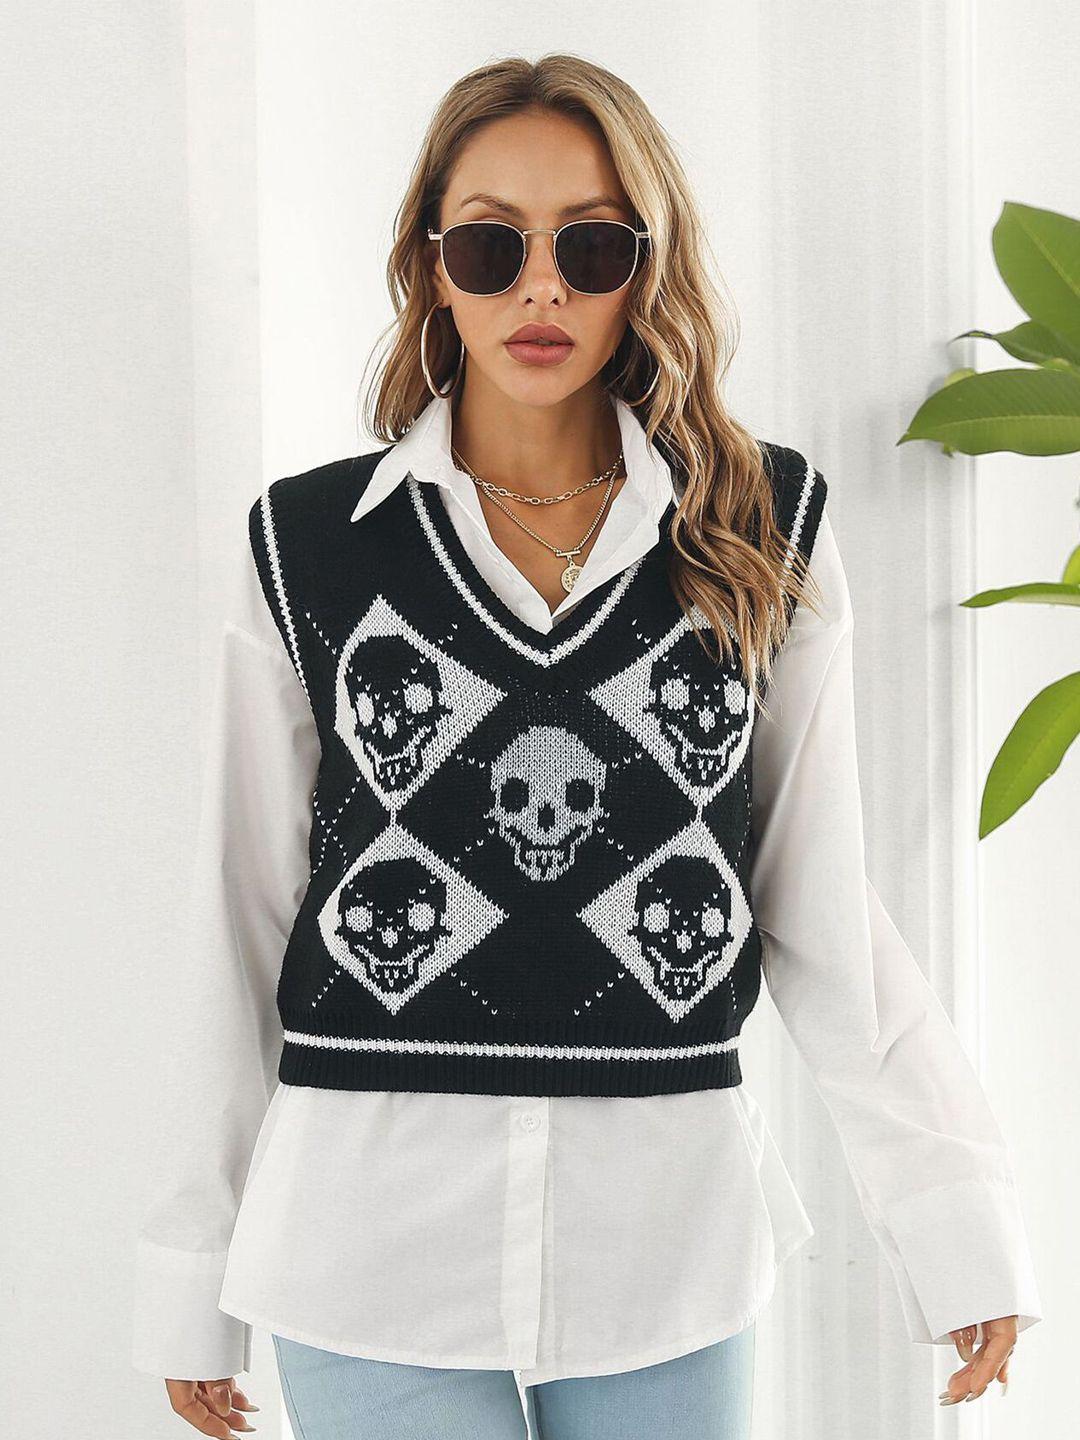 stylecast women black printed sweater vest